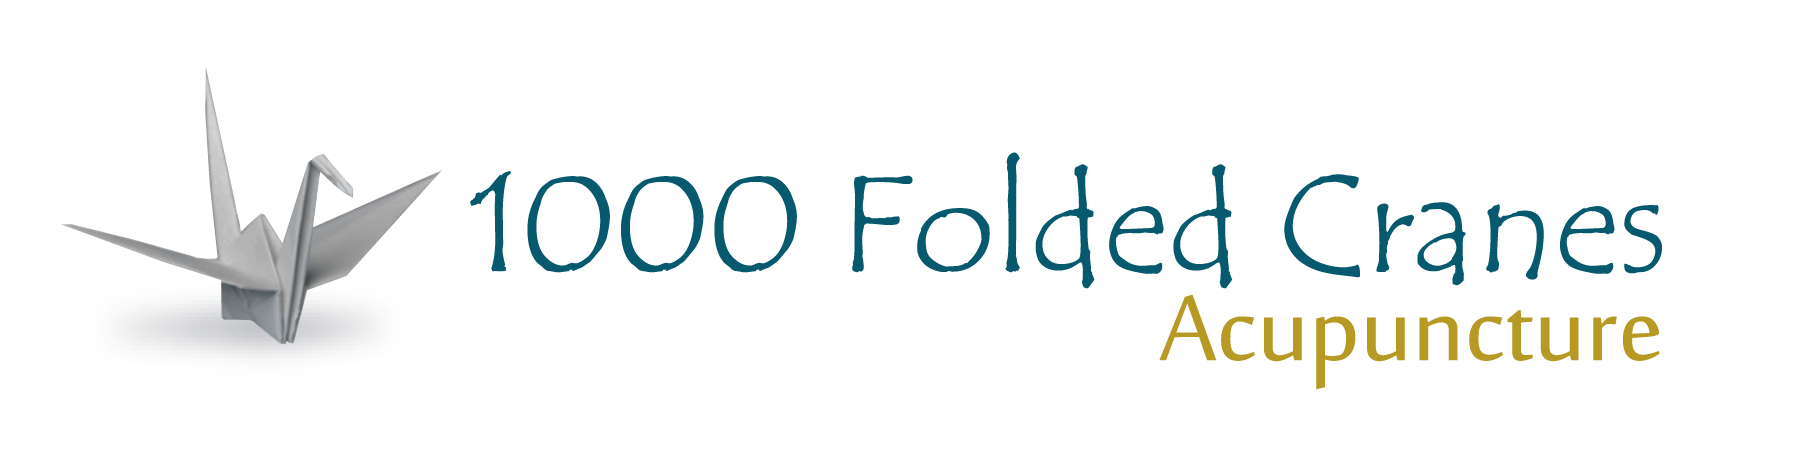 1000 Folded Cranes Logo